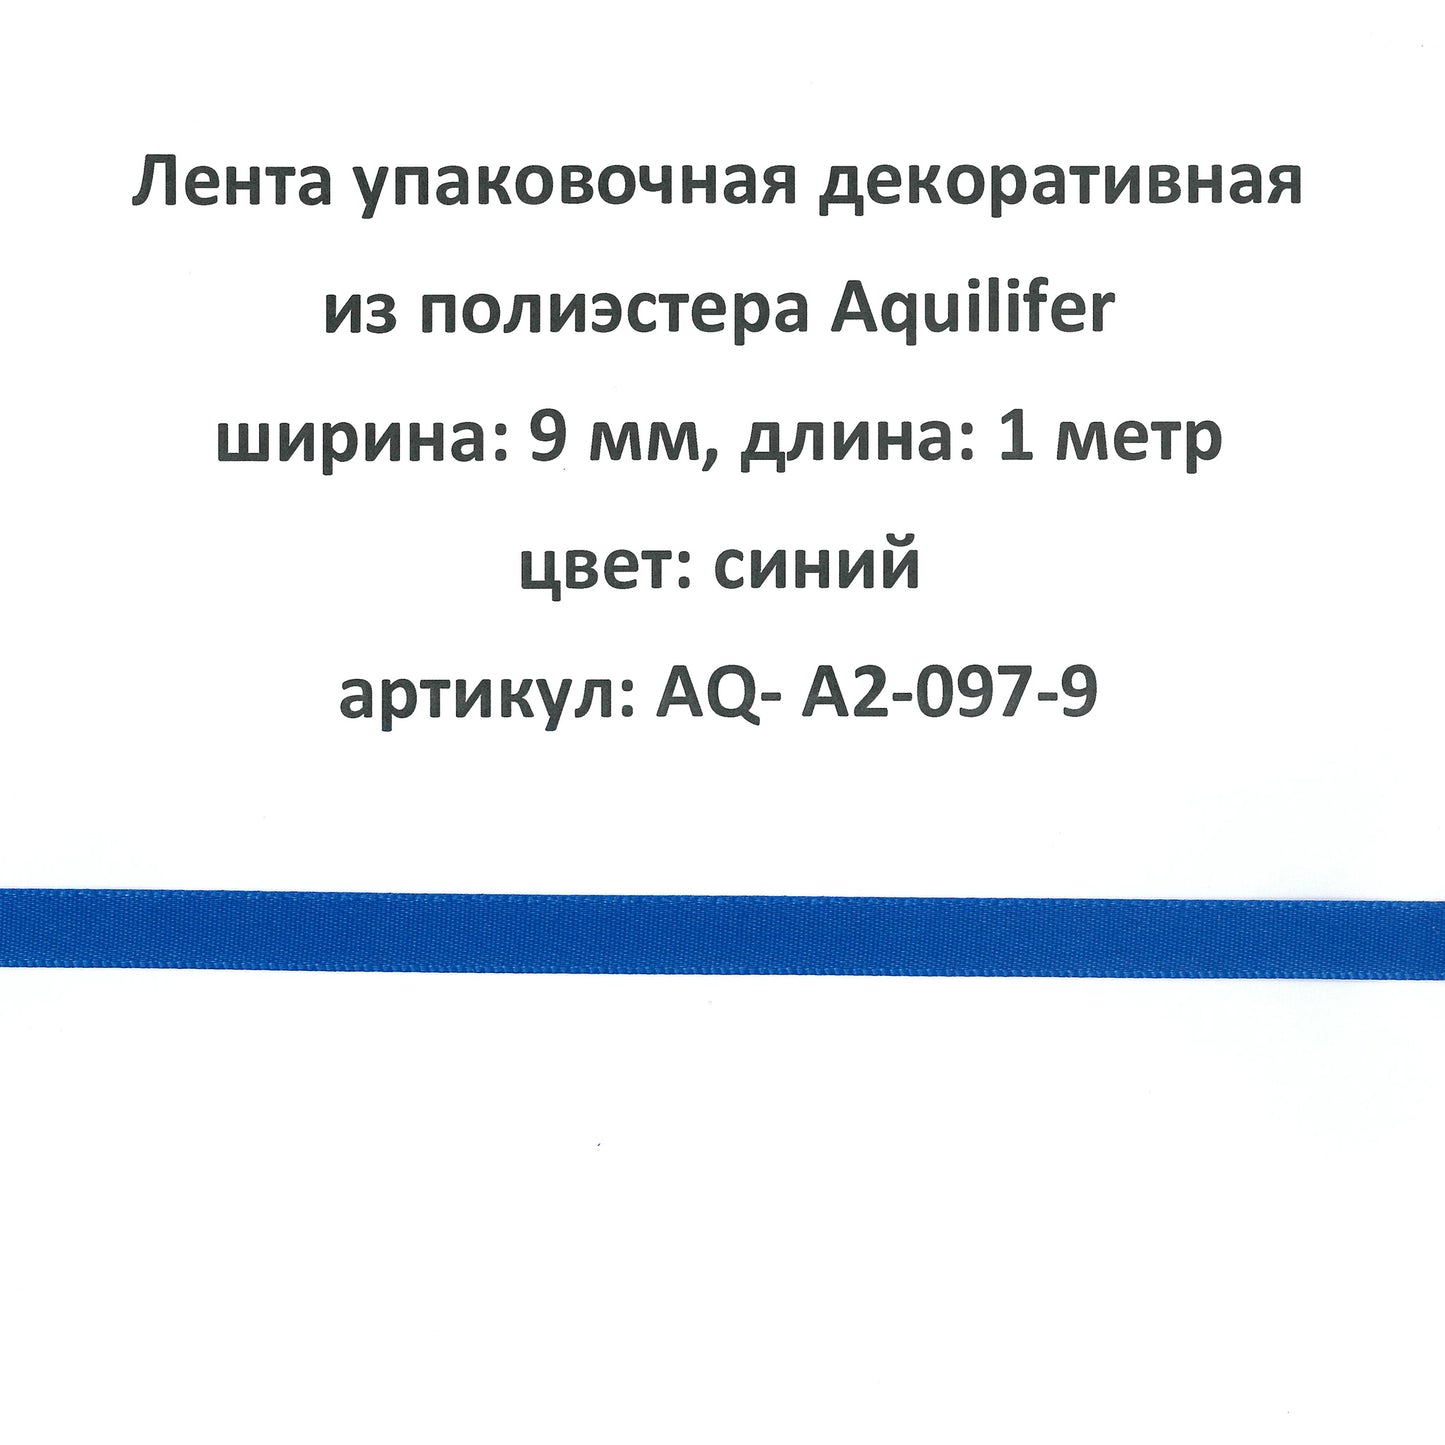 AQ-A2-097-9 - лента упаковочная декоративная из полиэстера Aquilifer, ширина: 9 мм, длина: 1 метр, цвет: синий